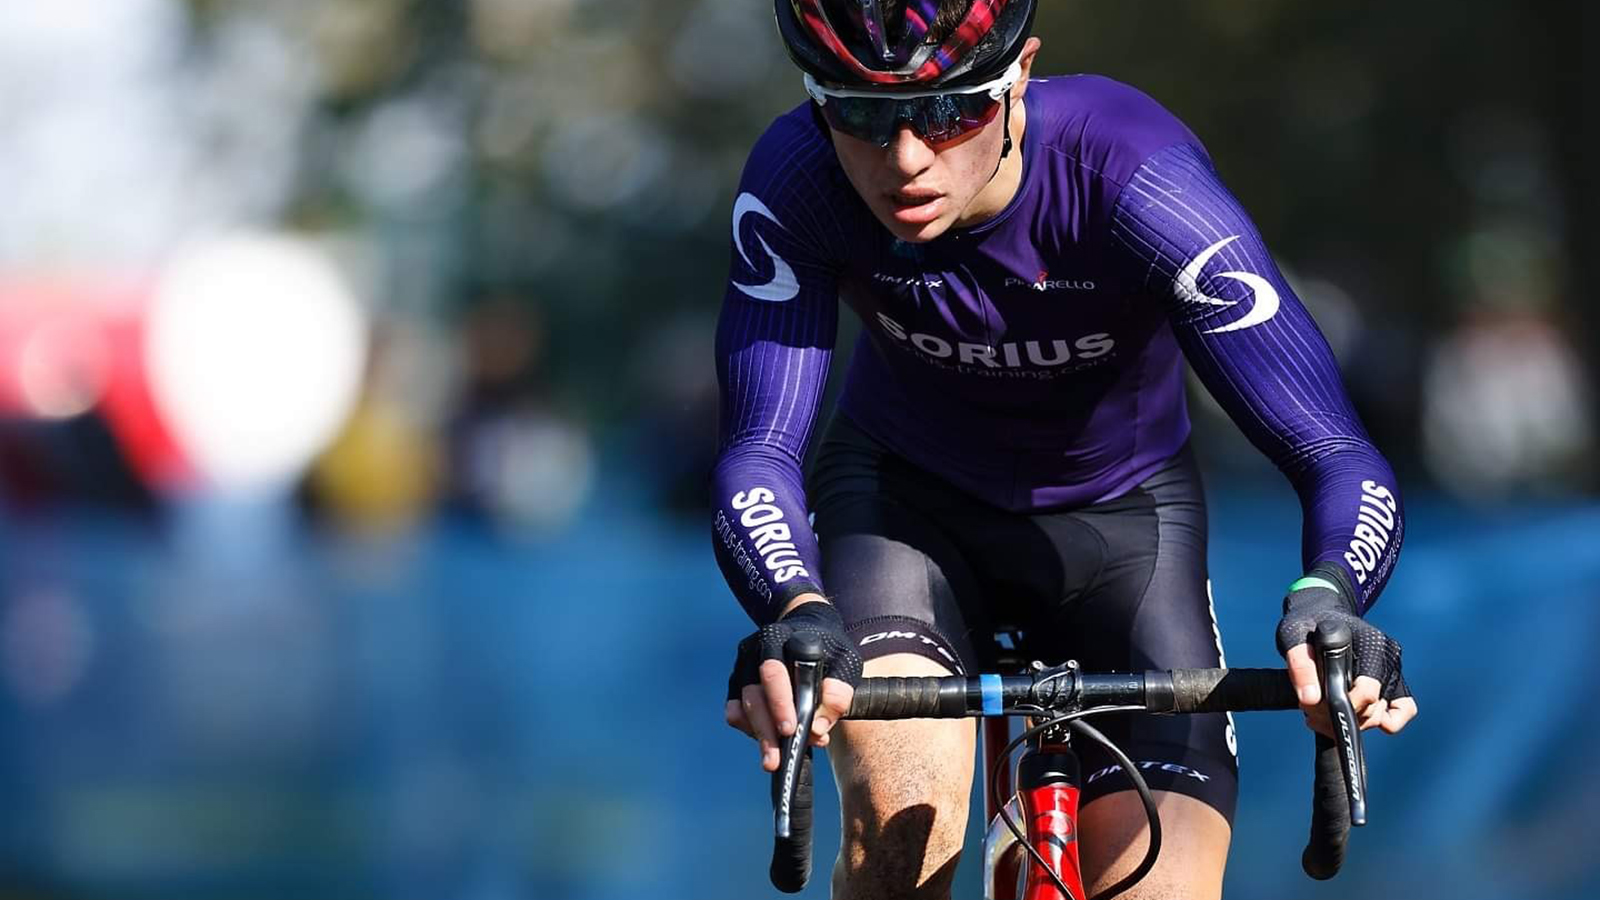 Louis Sparfel, Cyclocross, Soriüs Team UCI